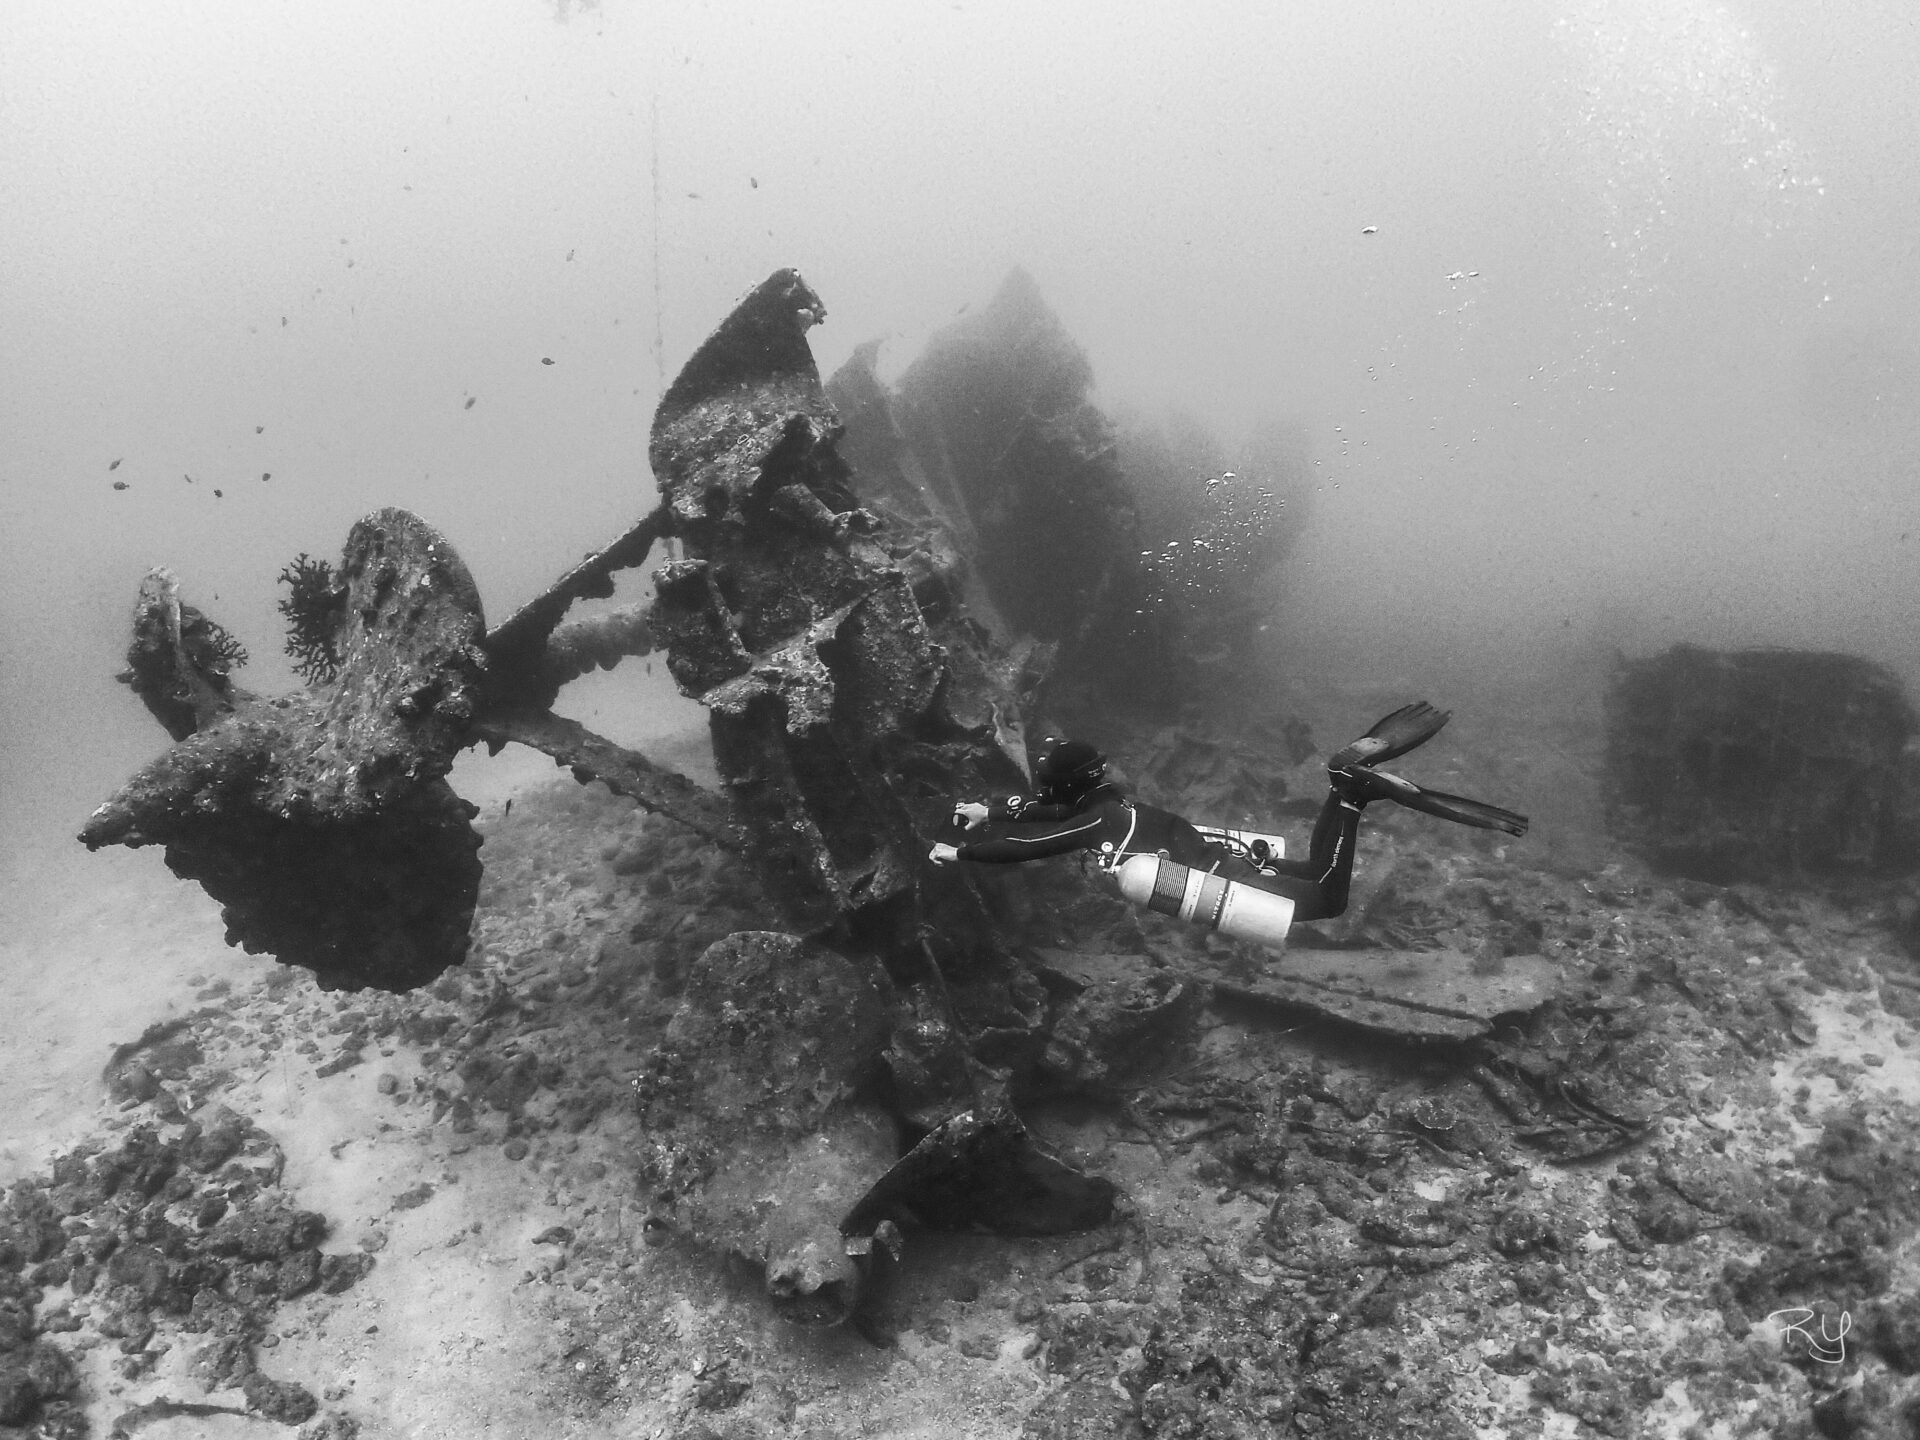 Sidemount diving in USS Emmons shipwreck